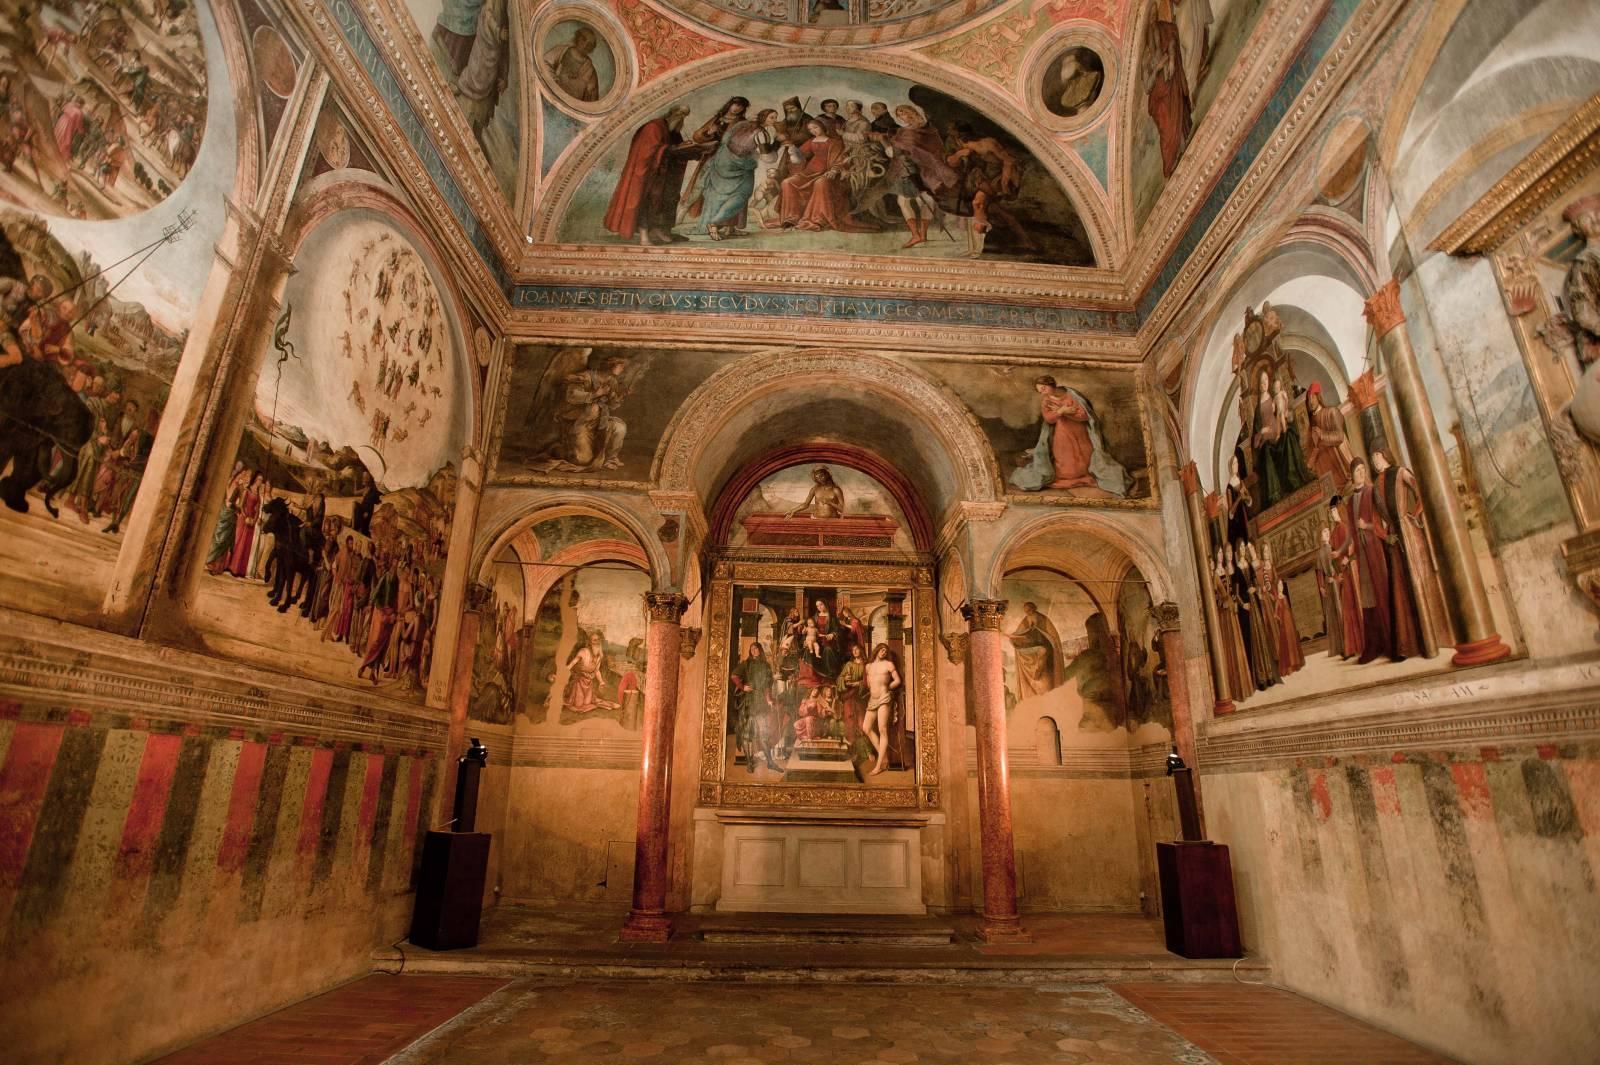 Cover image of this place Basilica di San Giacomo Maggiore